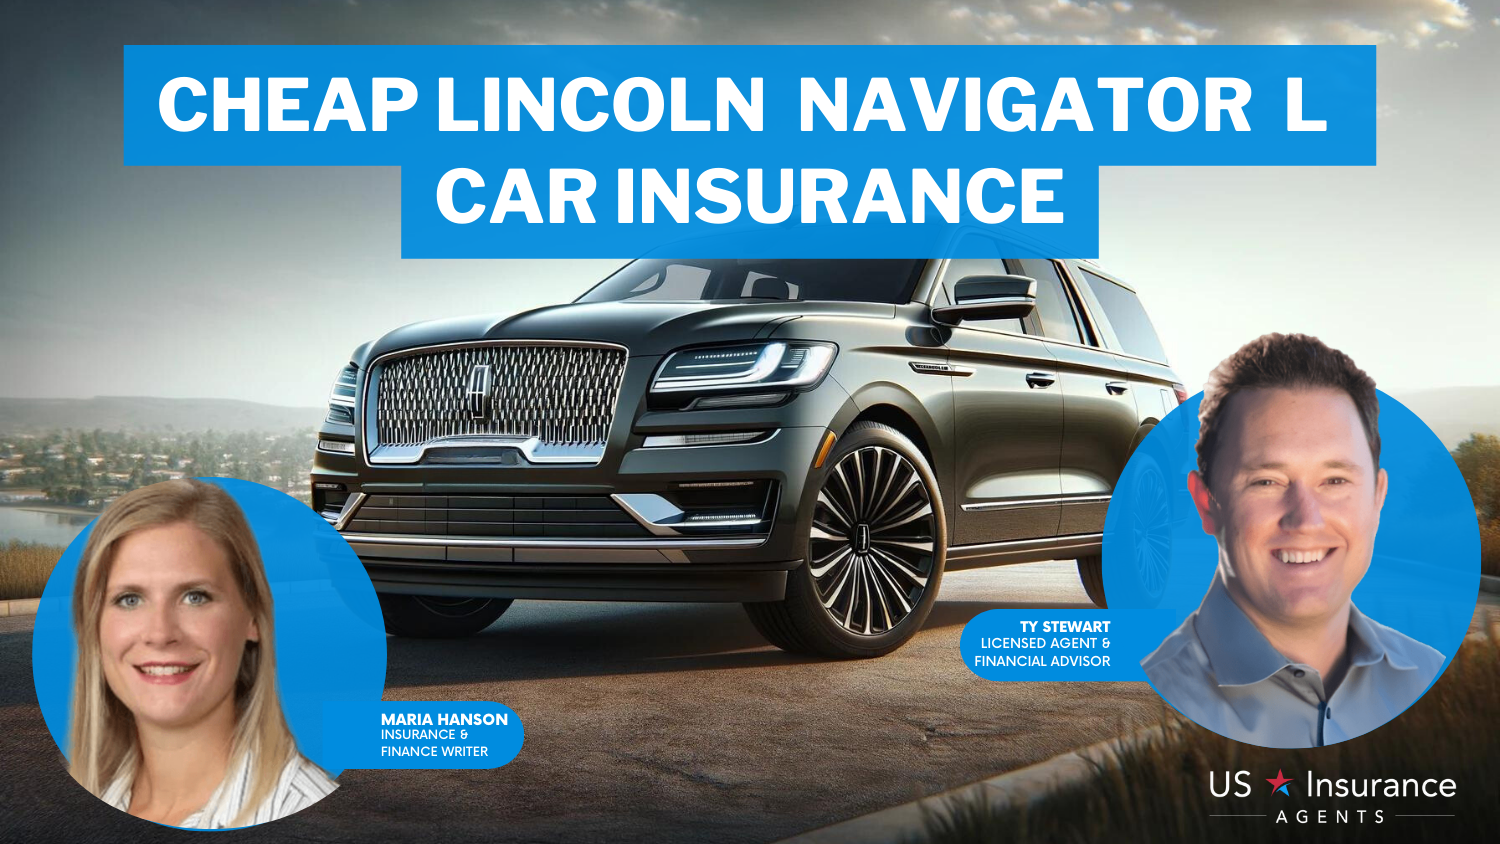 Cheap Lincoln Navigator L Car Insurance: Mercury, American Family, and State Farm